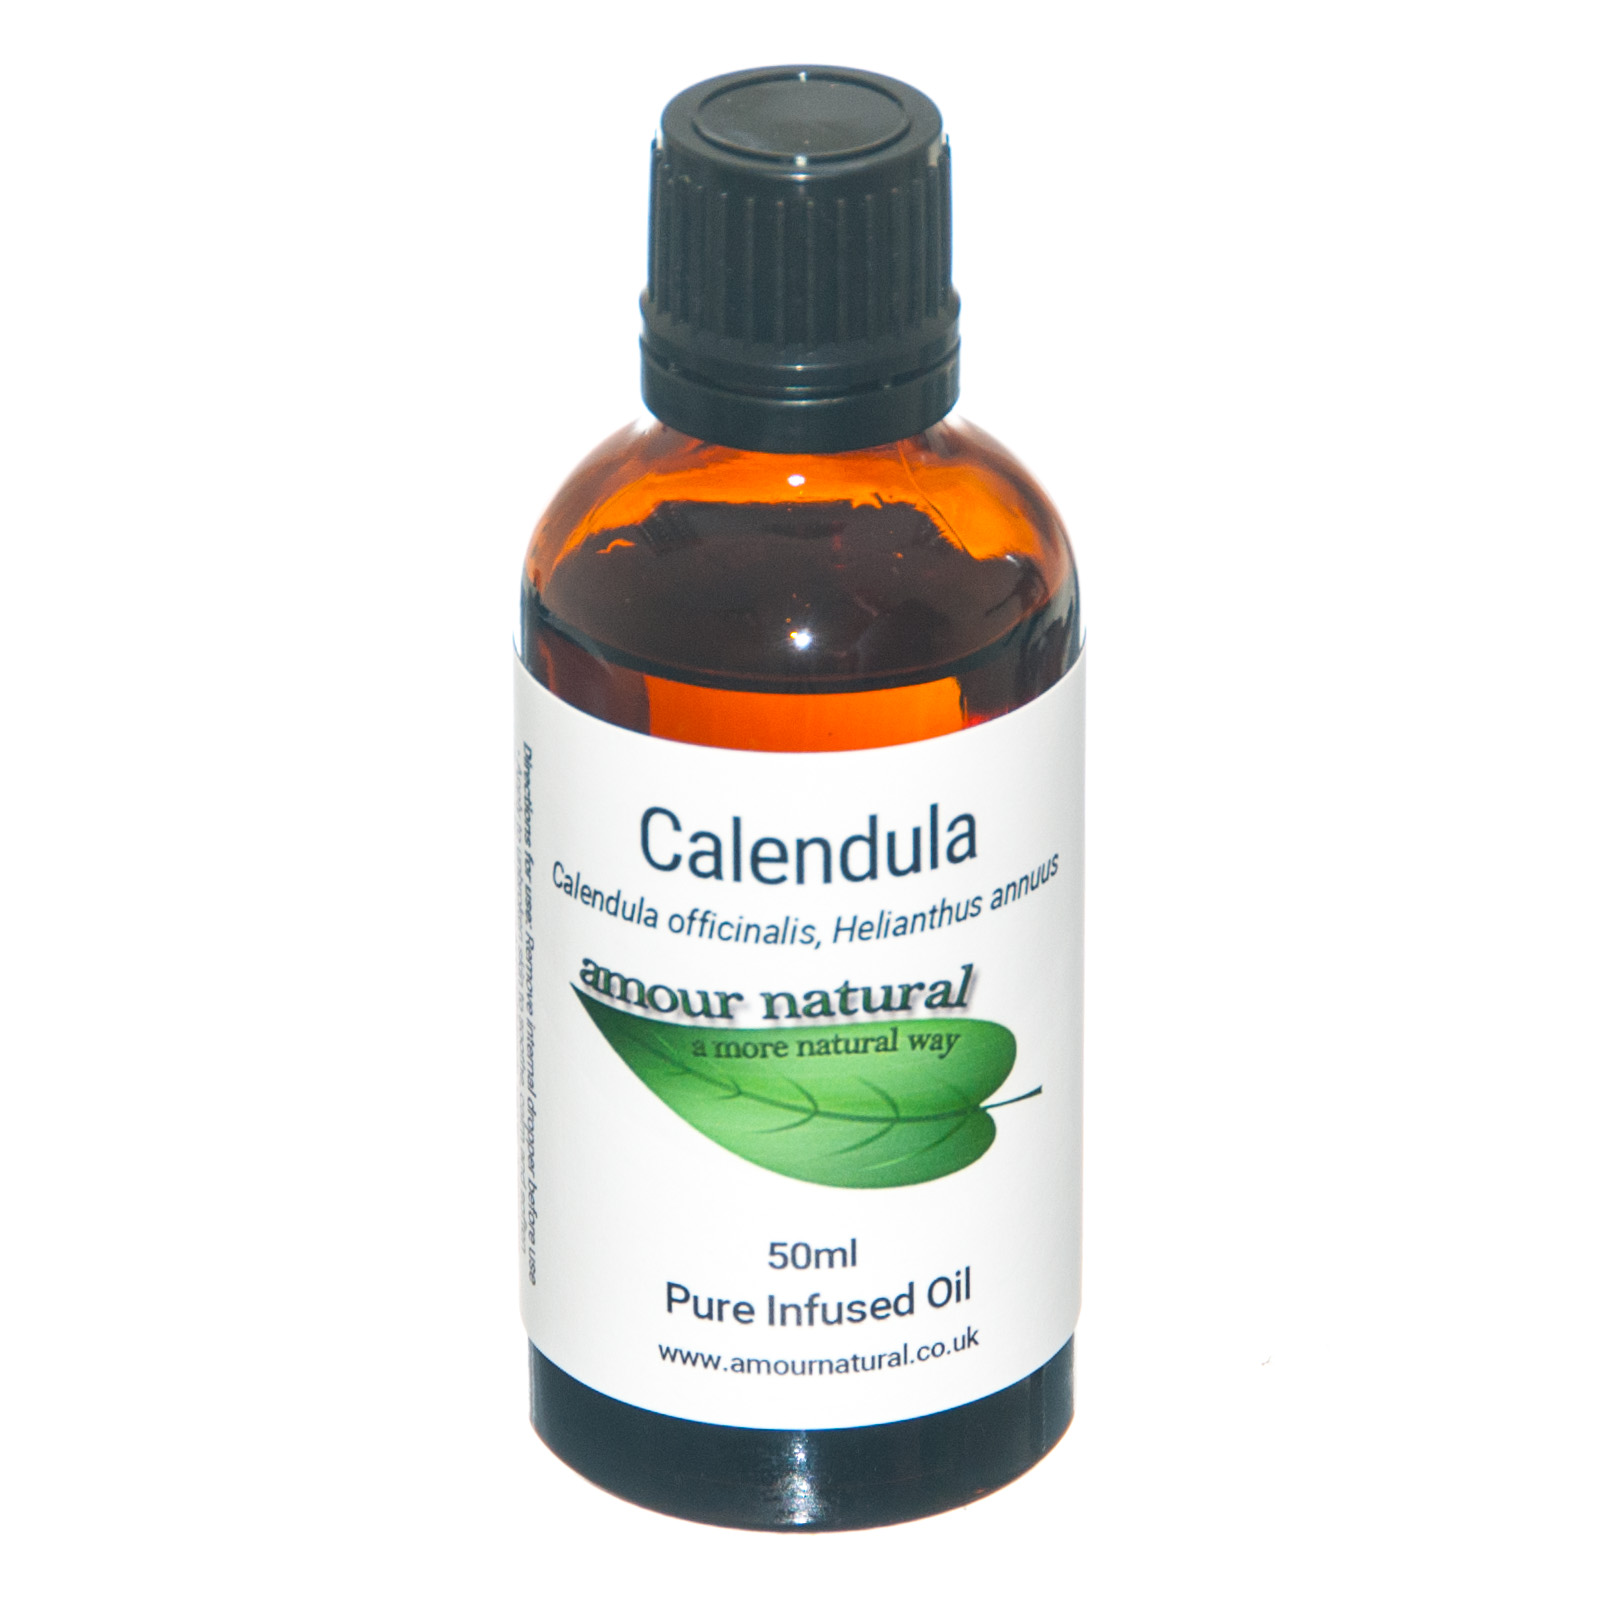 Calendula oil, infused